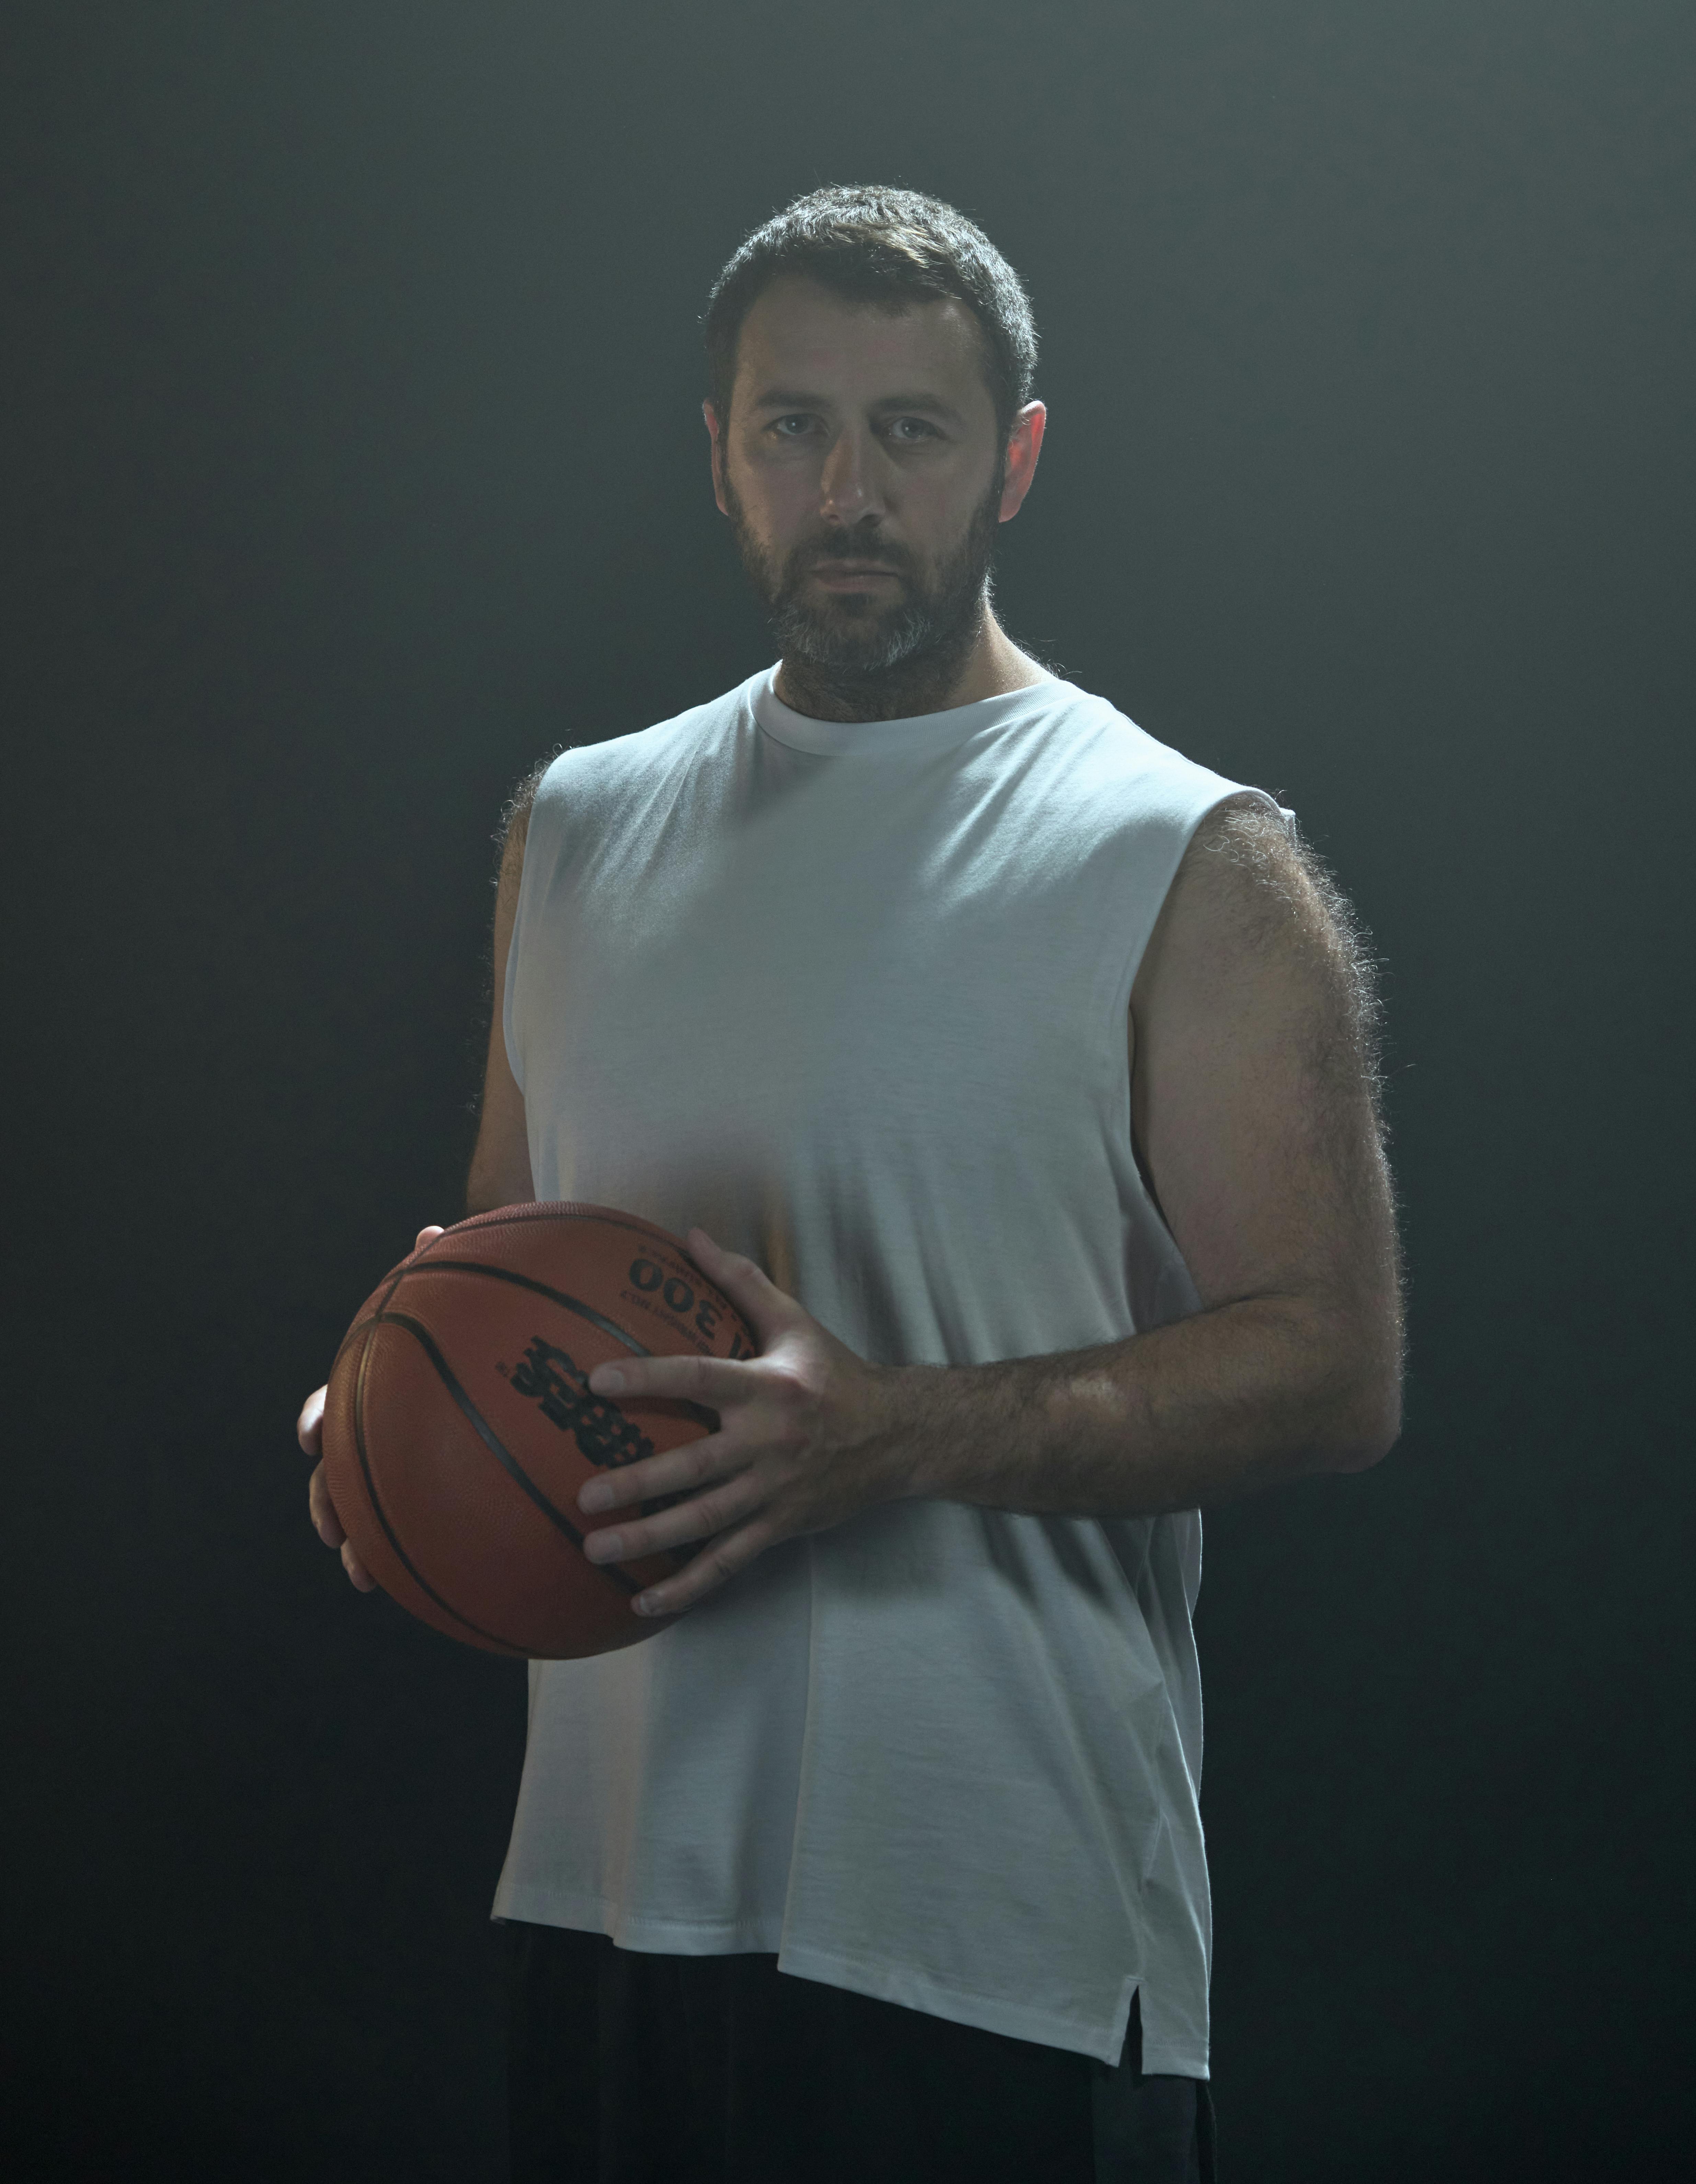 Man Posing in Basketball Tank Top on White Fabric · Free Stock Photo